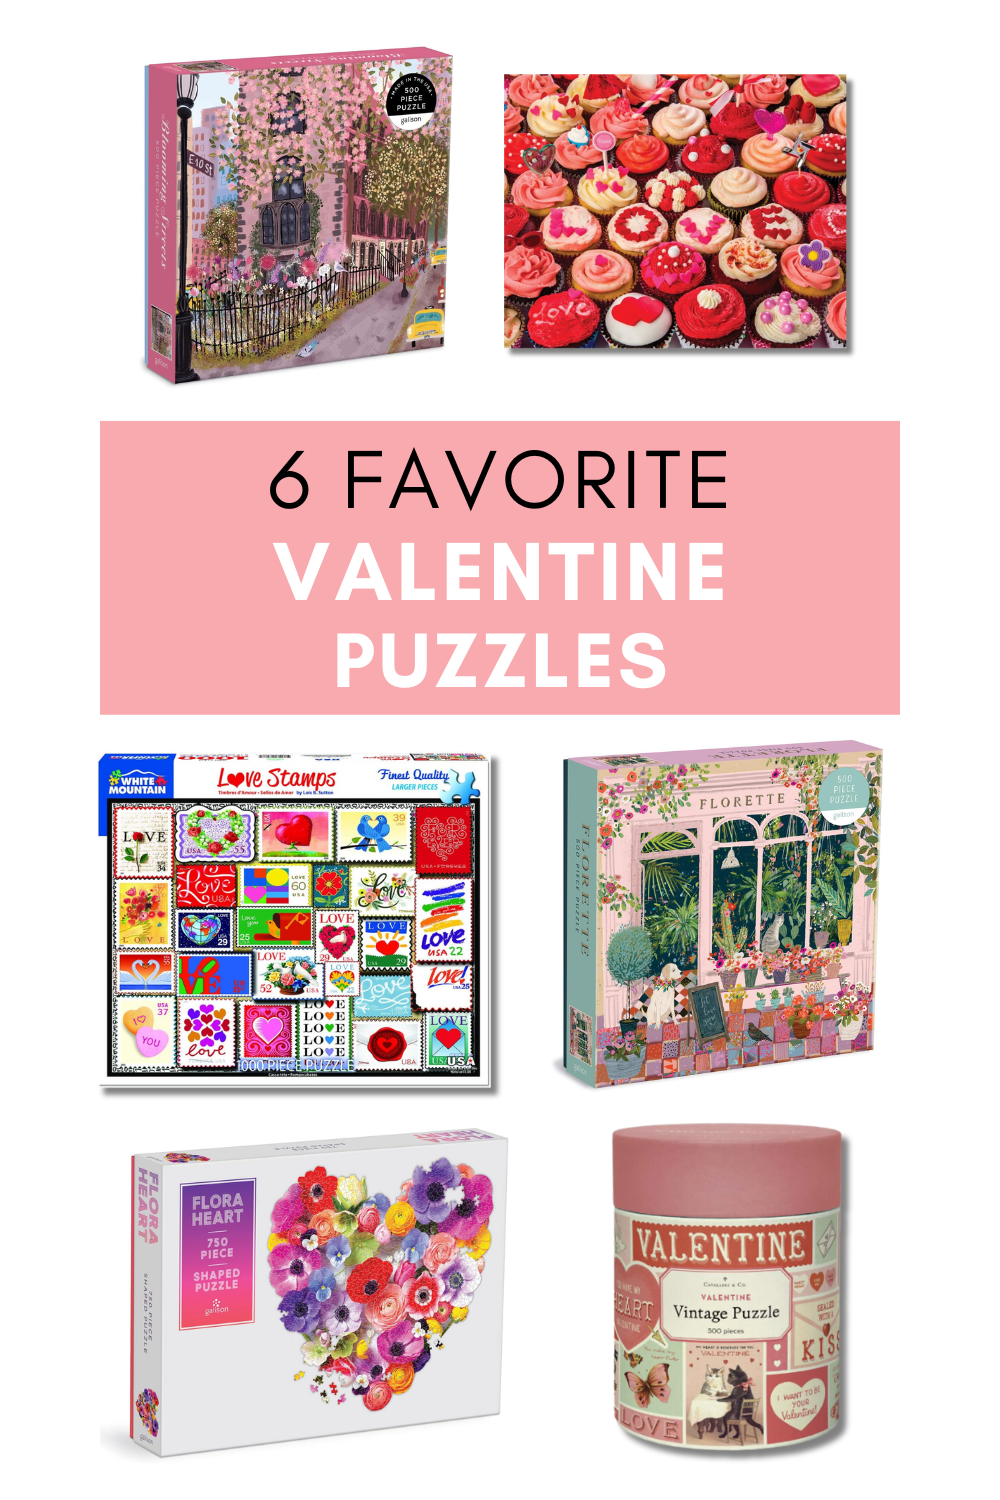 6 Favorite Valentine Puzzles